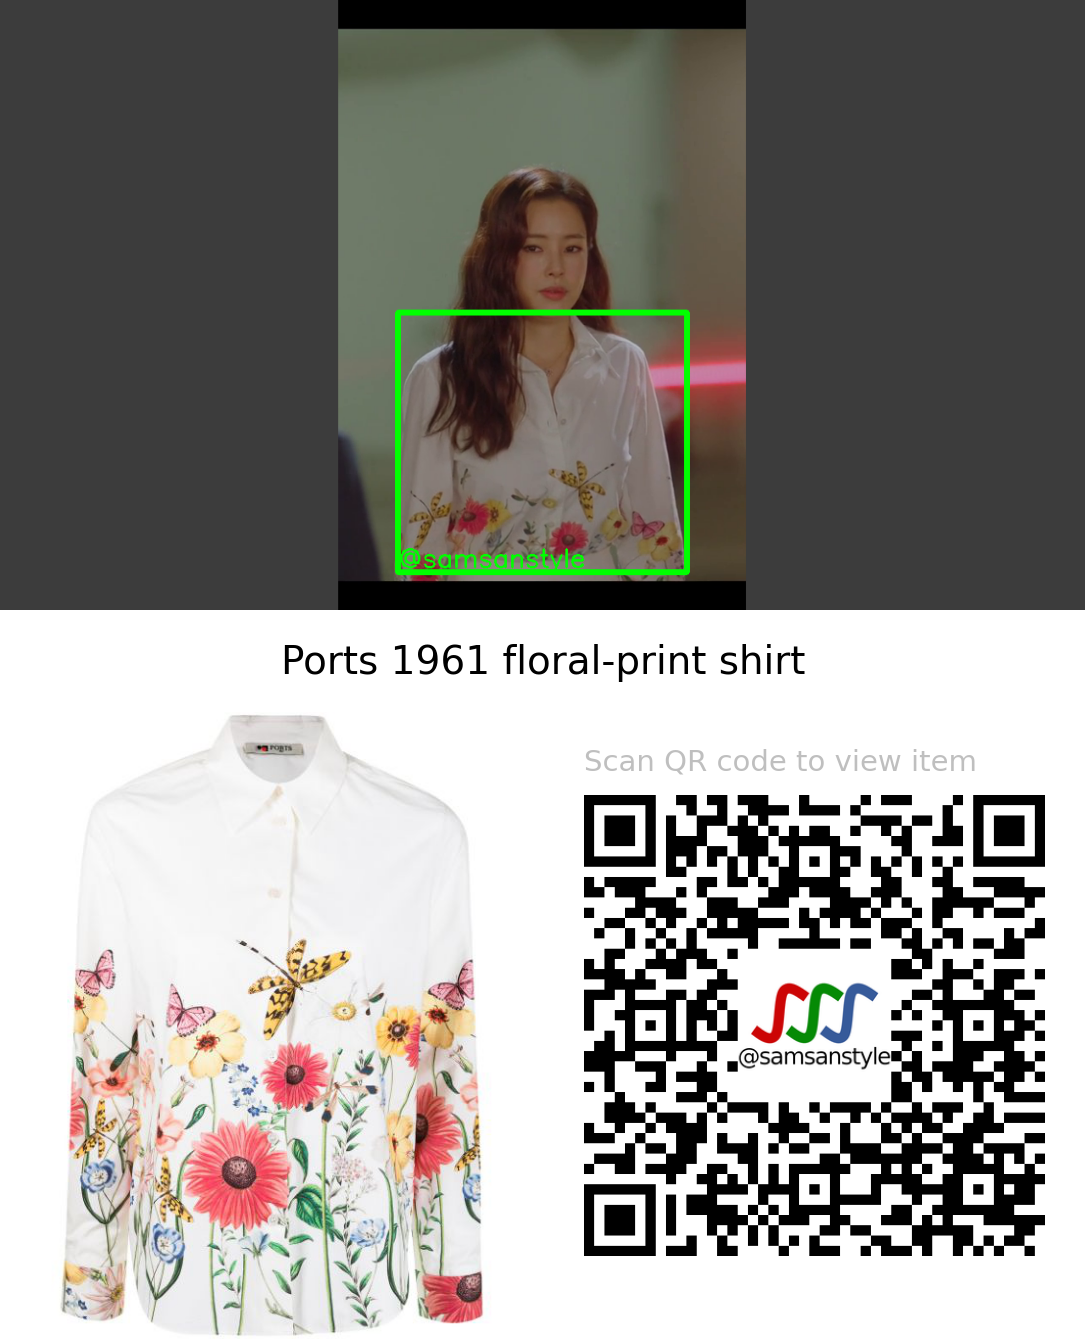 Lee Ha Nee | One the Woman E11 | Ports 1961 floral-print shirt